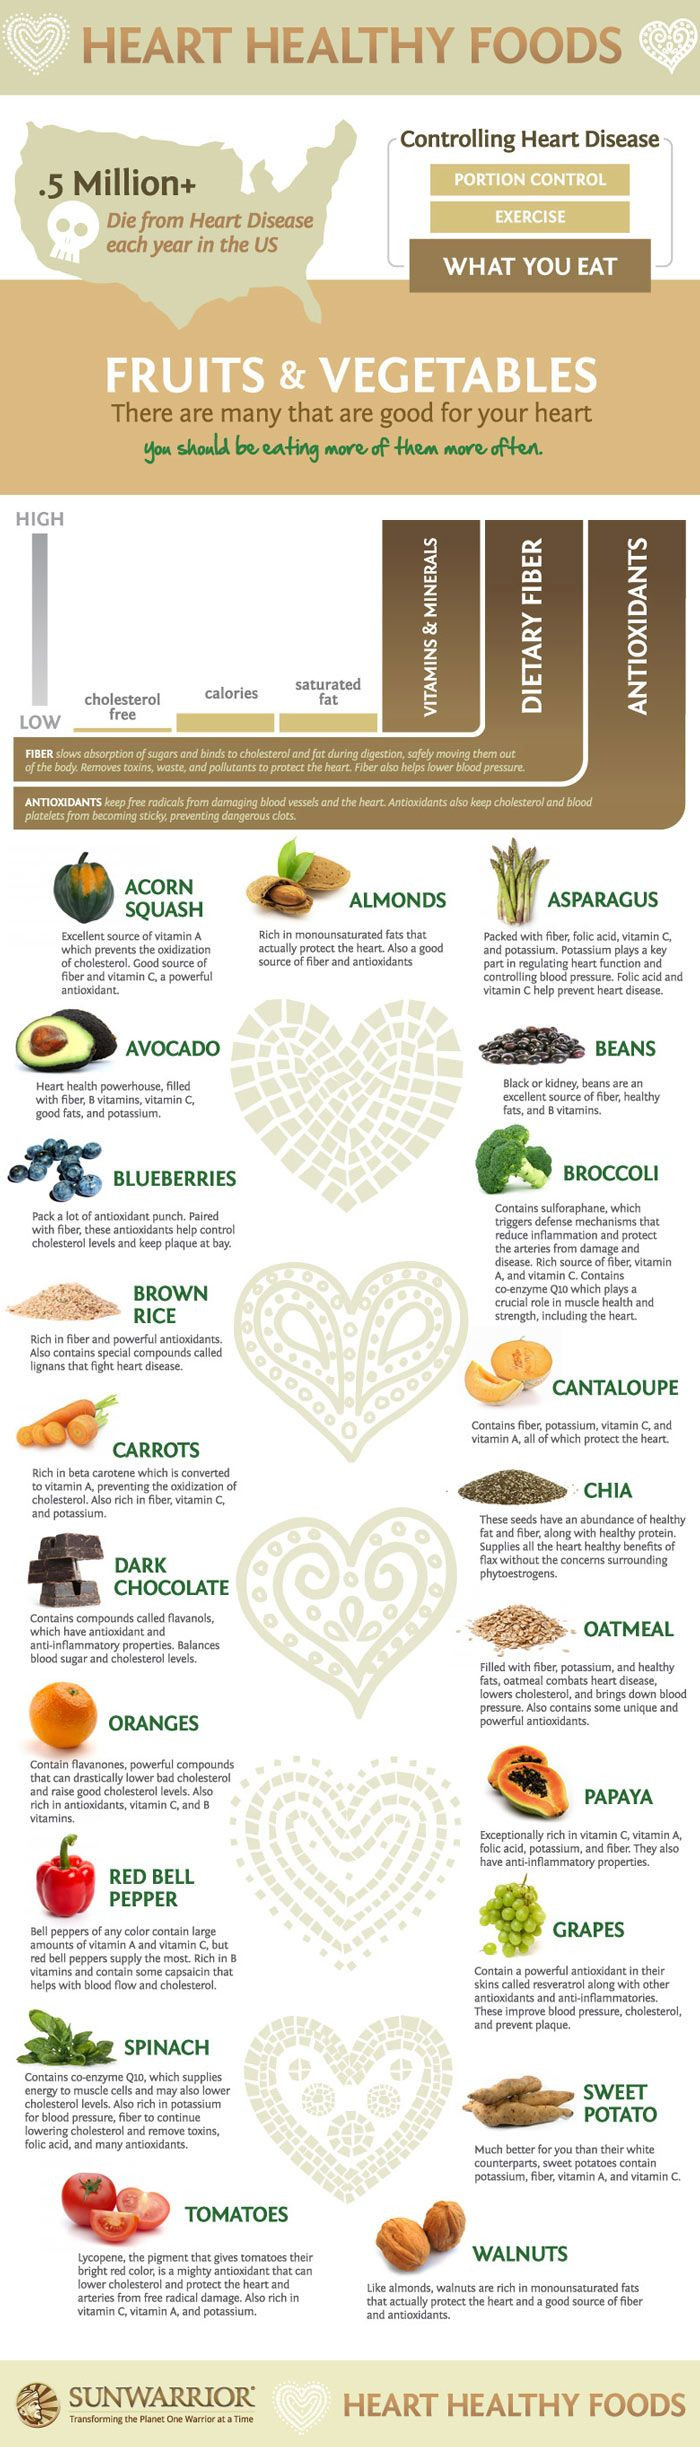 Heart Healthy Snacks To Buy
 Top Heart Healthy Foods To Help Prevent Heart Disease